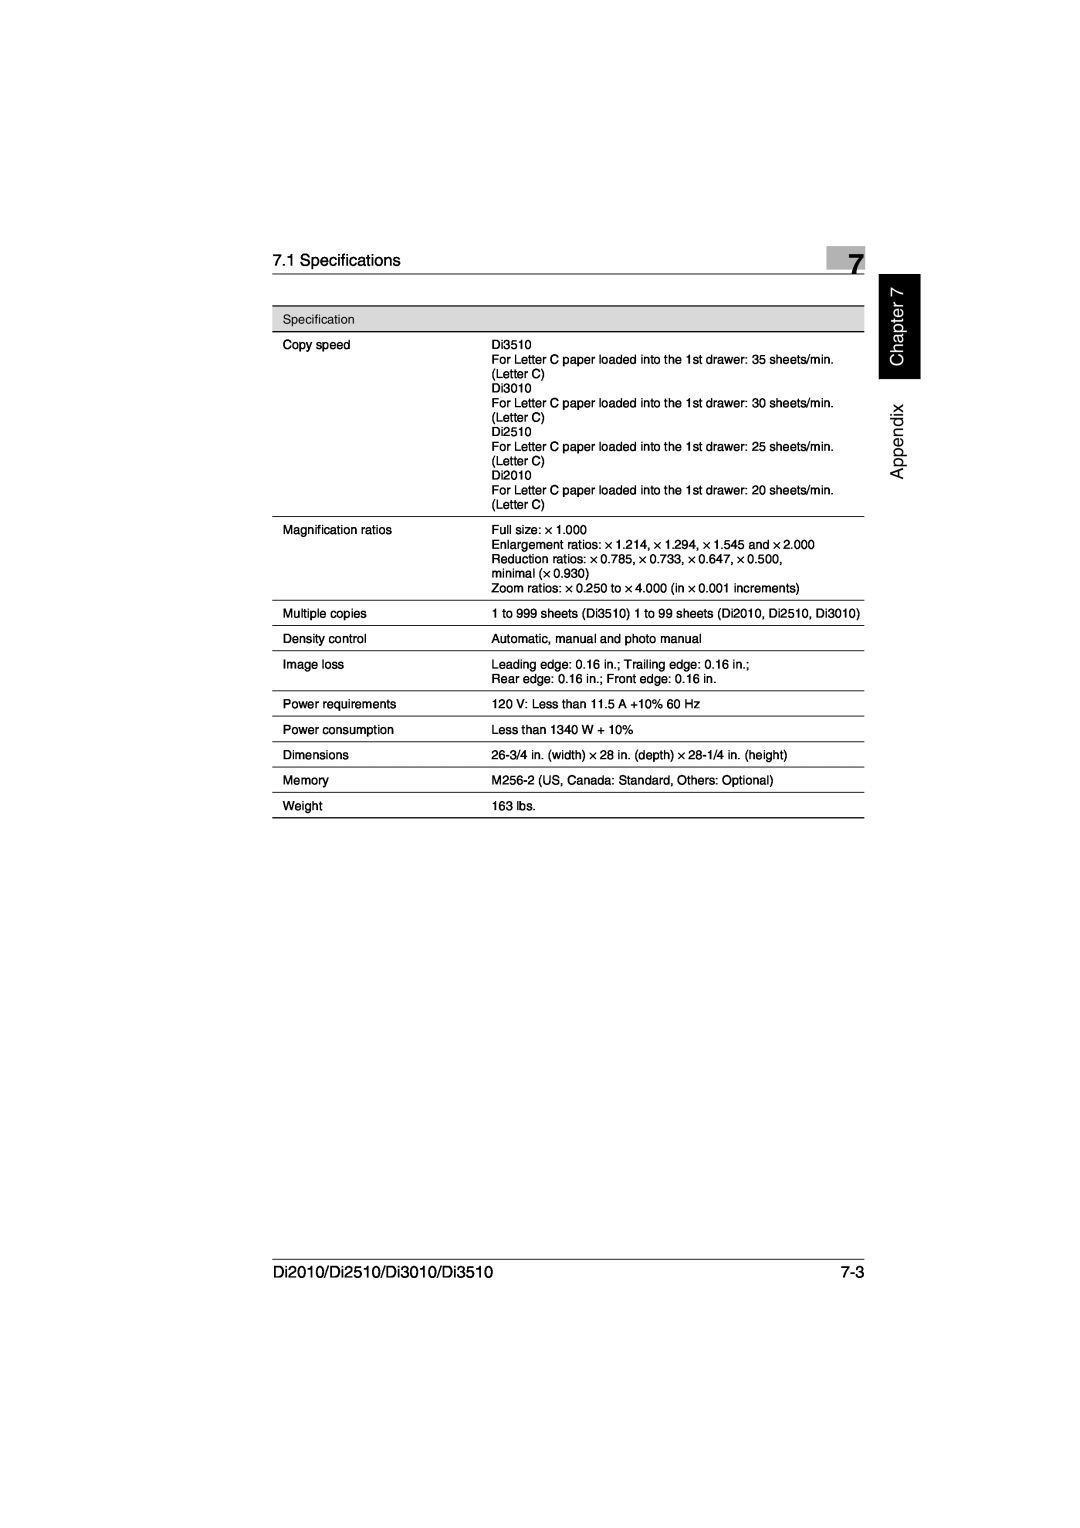 Minolta DI2510, DI2010, DI3010 user manual Appendix Chapter, Specifications, Di2010/Di2510/Di3010/Di3510 